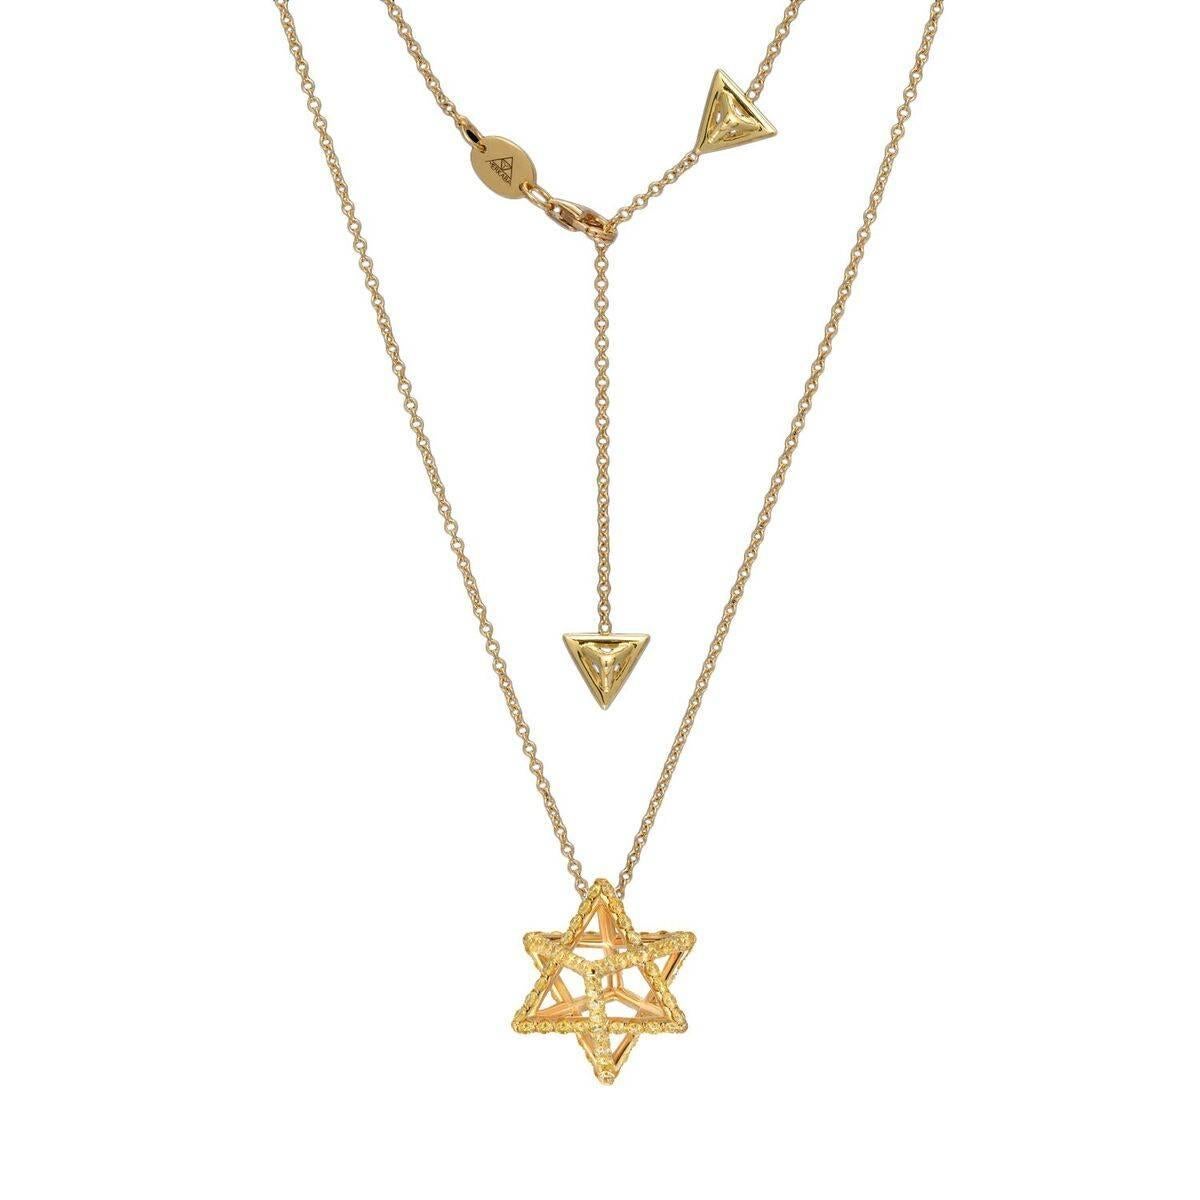 Round Cut Yellow Diamond Necklace 1.28 Carats Gold Merkaba Star